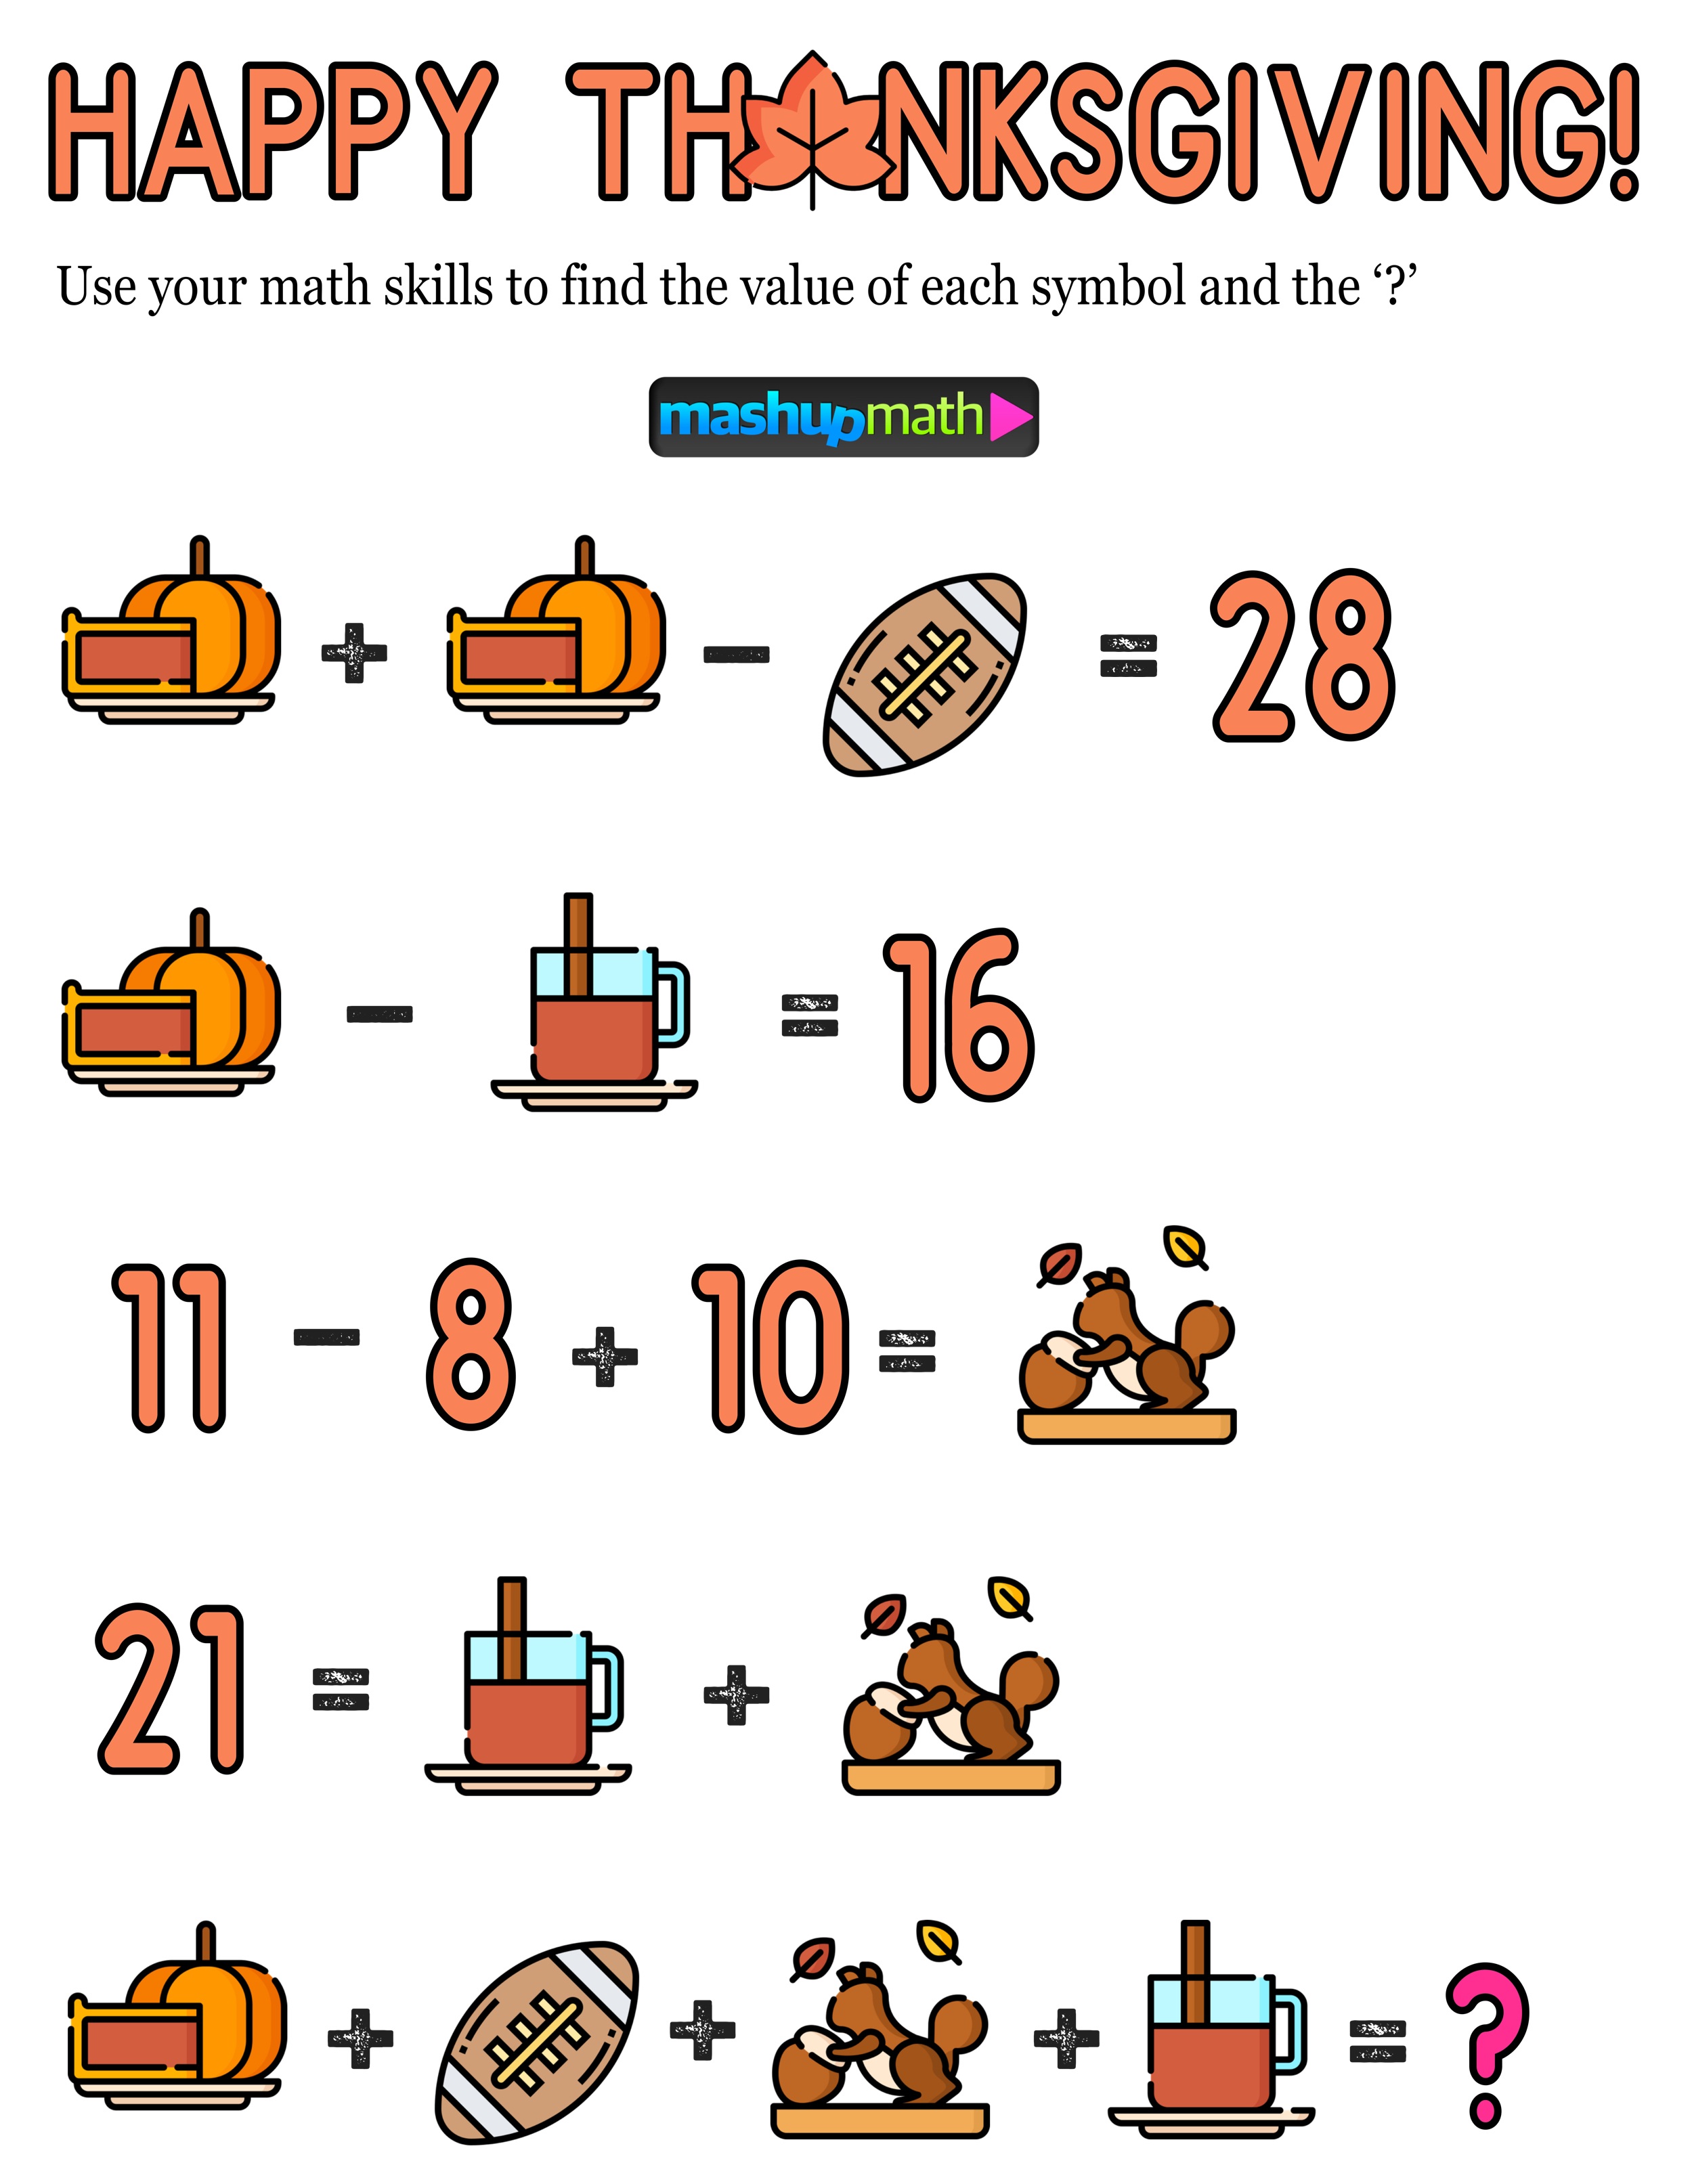 12-thanksgiving-math-activities-for-grades-1-8-mashup-math